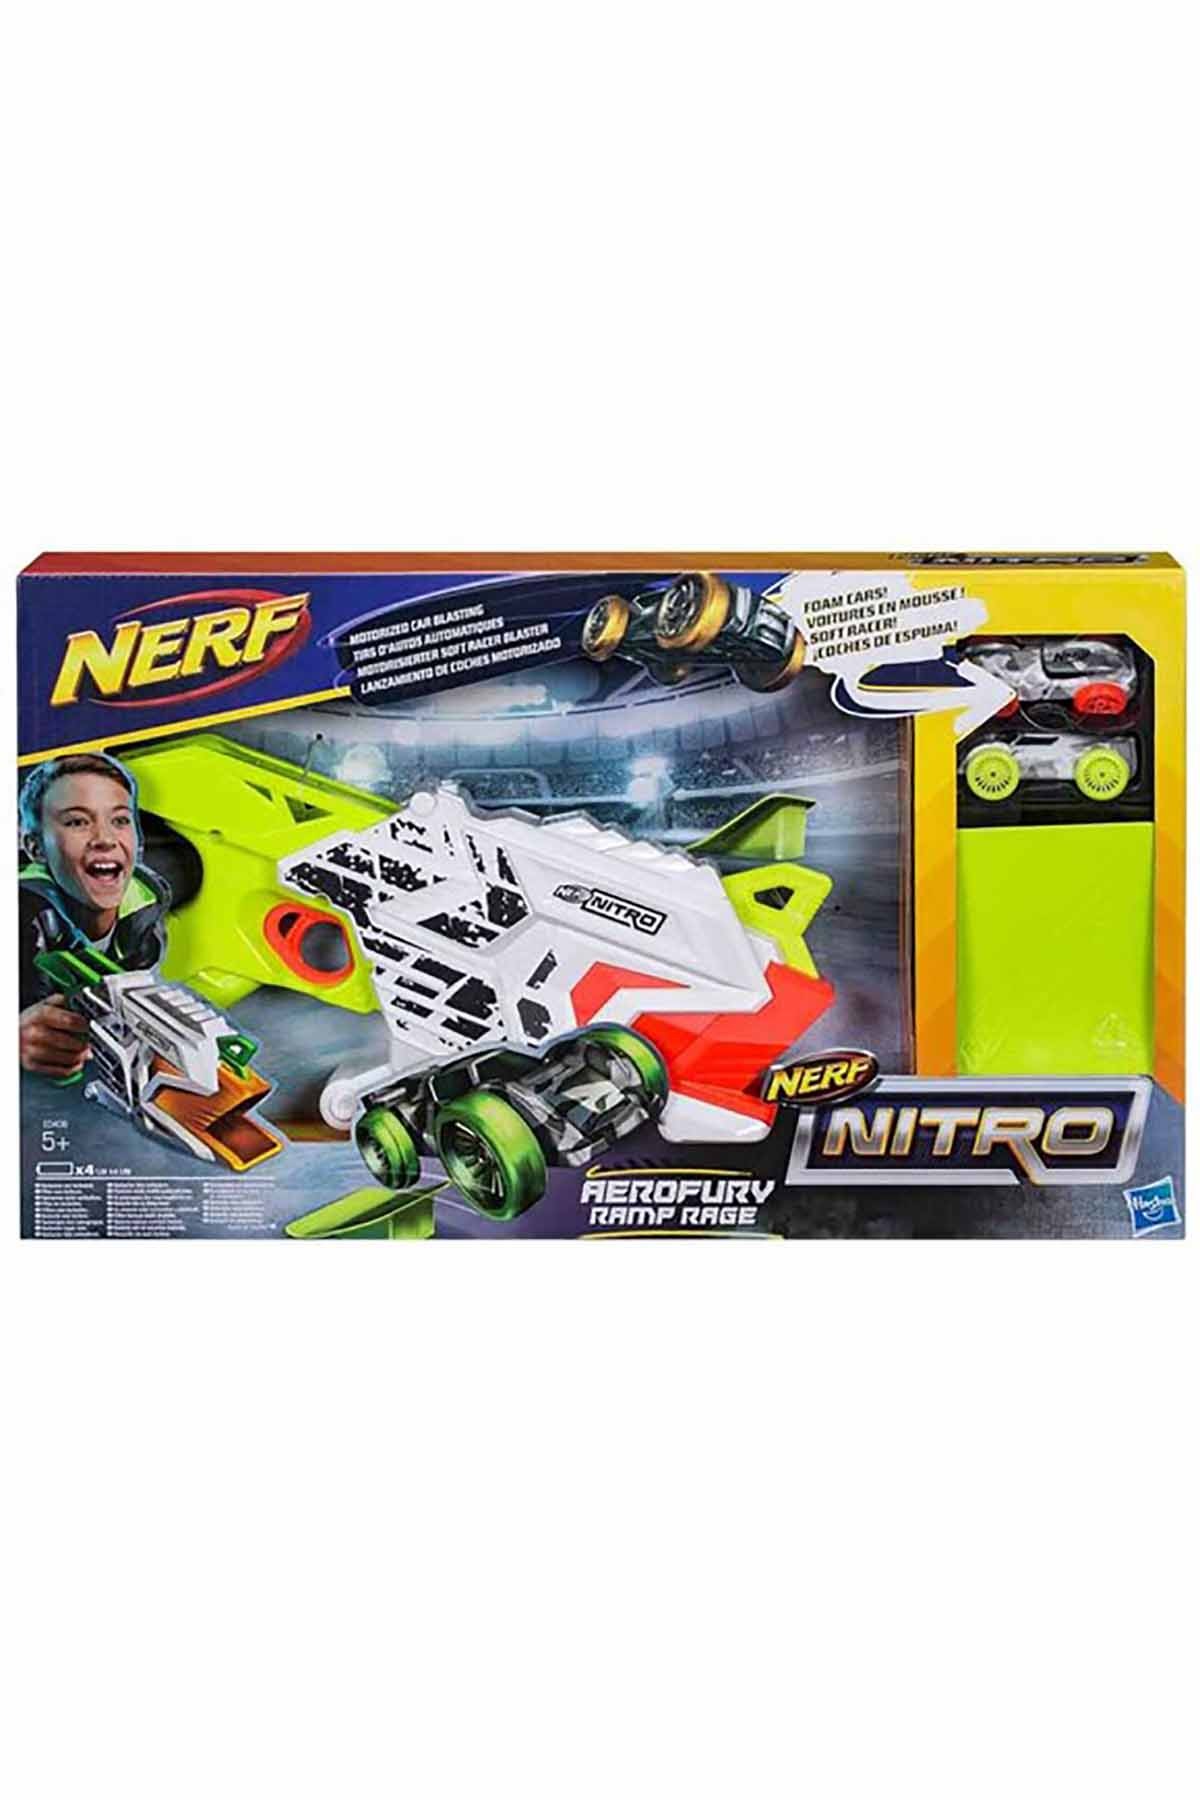 Nerf Nitro Aerofury Rampage